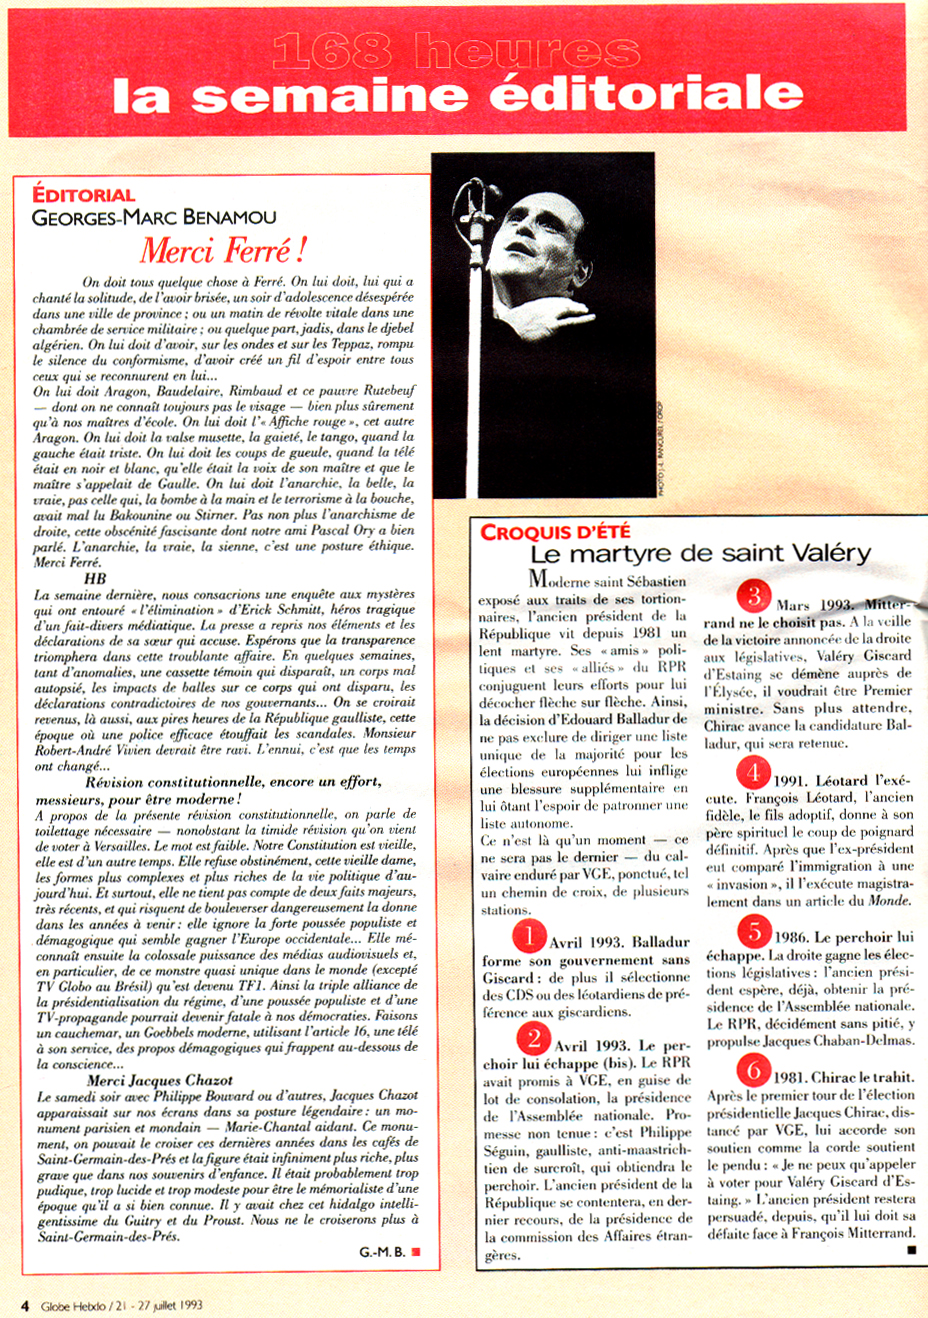 Léo Ferré - Globe Hebdo N°24 du 21 au 27/07/1993